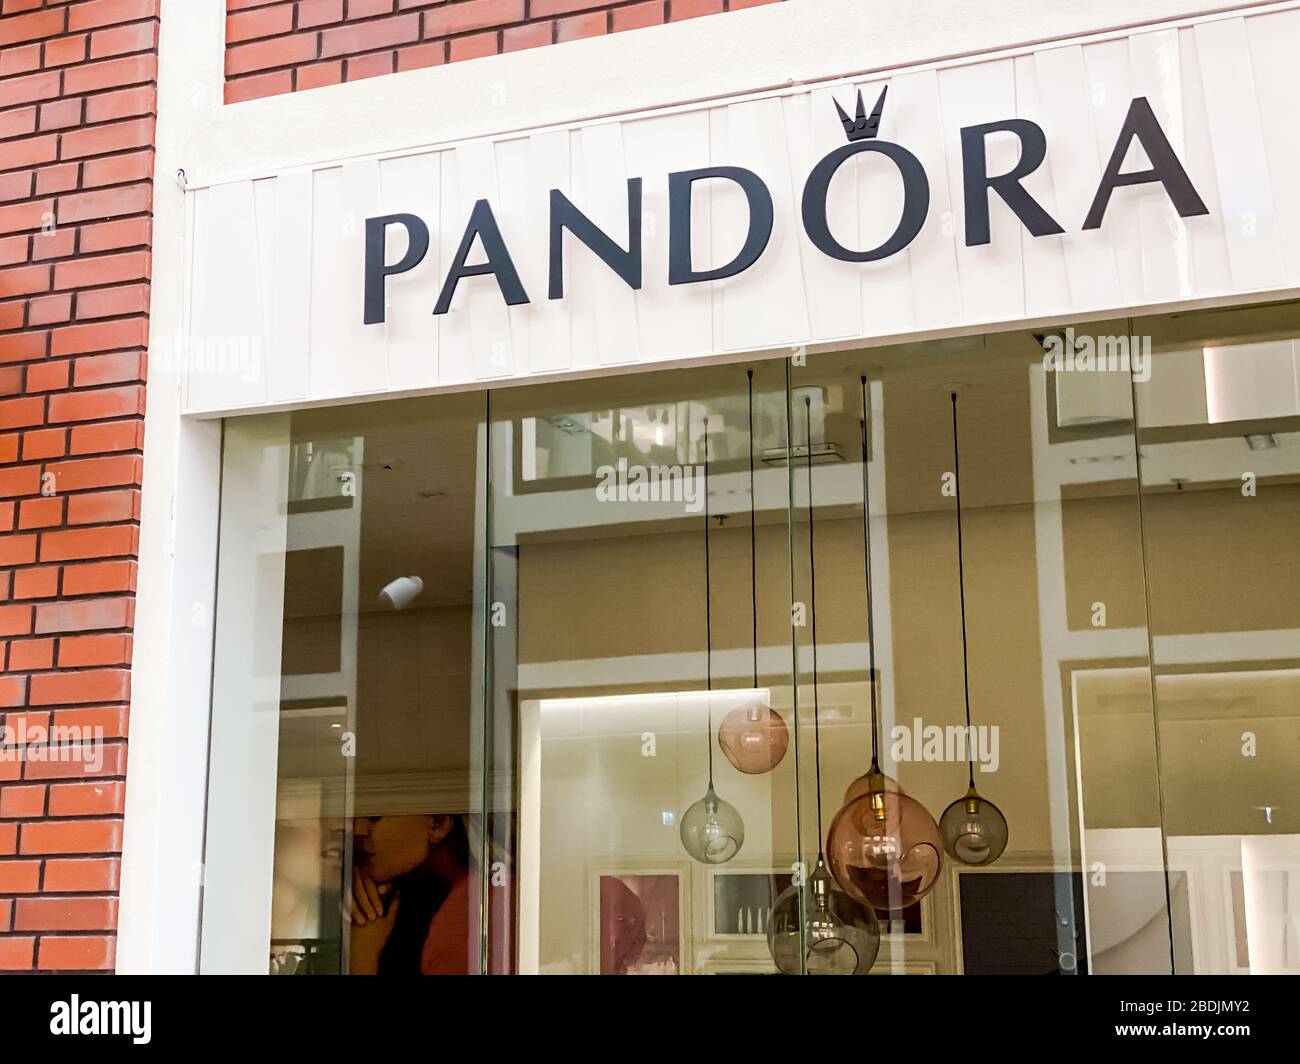 Pandora Laden der Kette von Modeschmuck Accessoires Geschäfte, in modernen  Shopping Mall. Mobiles Foto. Bialystok, Polen - 16. Februar 2020  Stockfotografie - Alamy